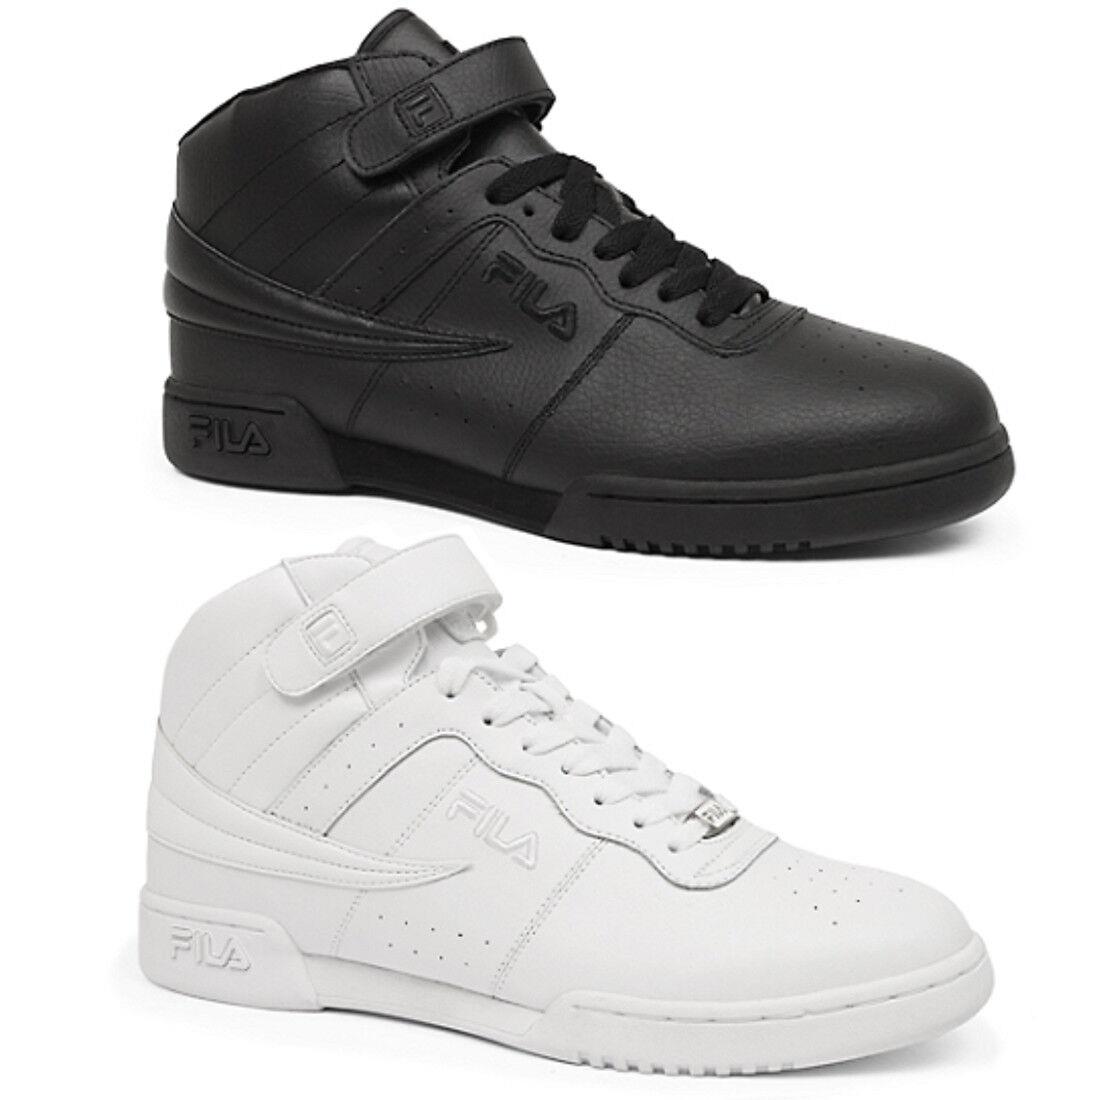 Mens Fila F13 F-13 Classic Mid High Top Basketball Shoes Sneakers White Black - Black , White